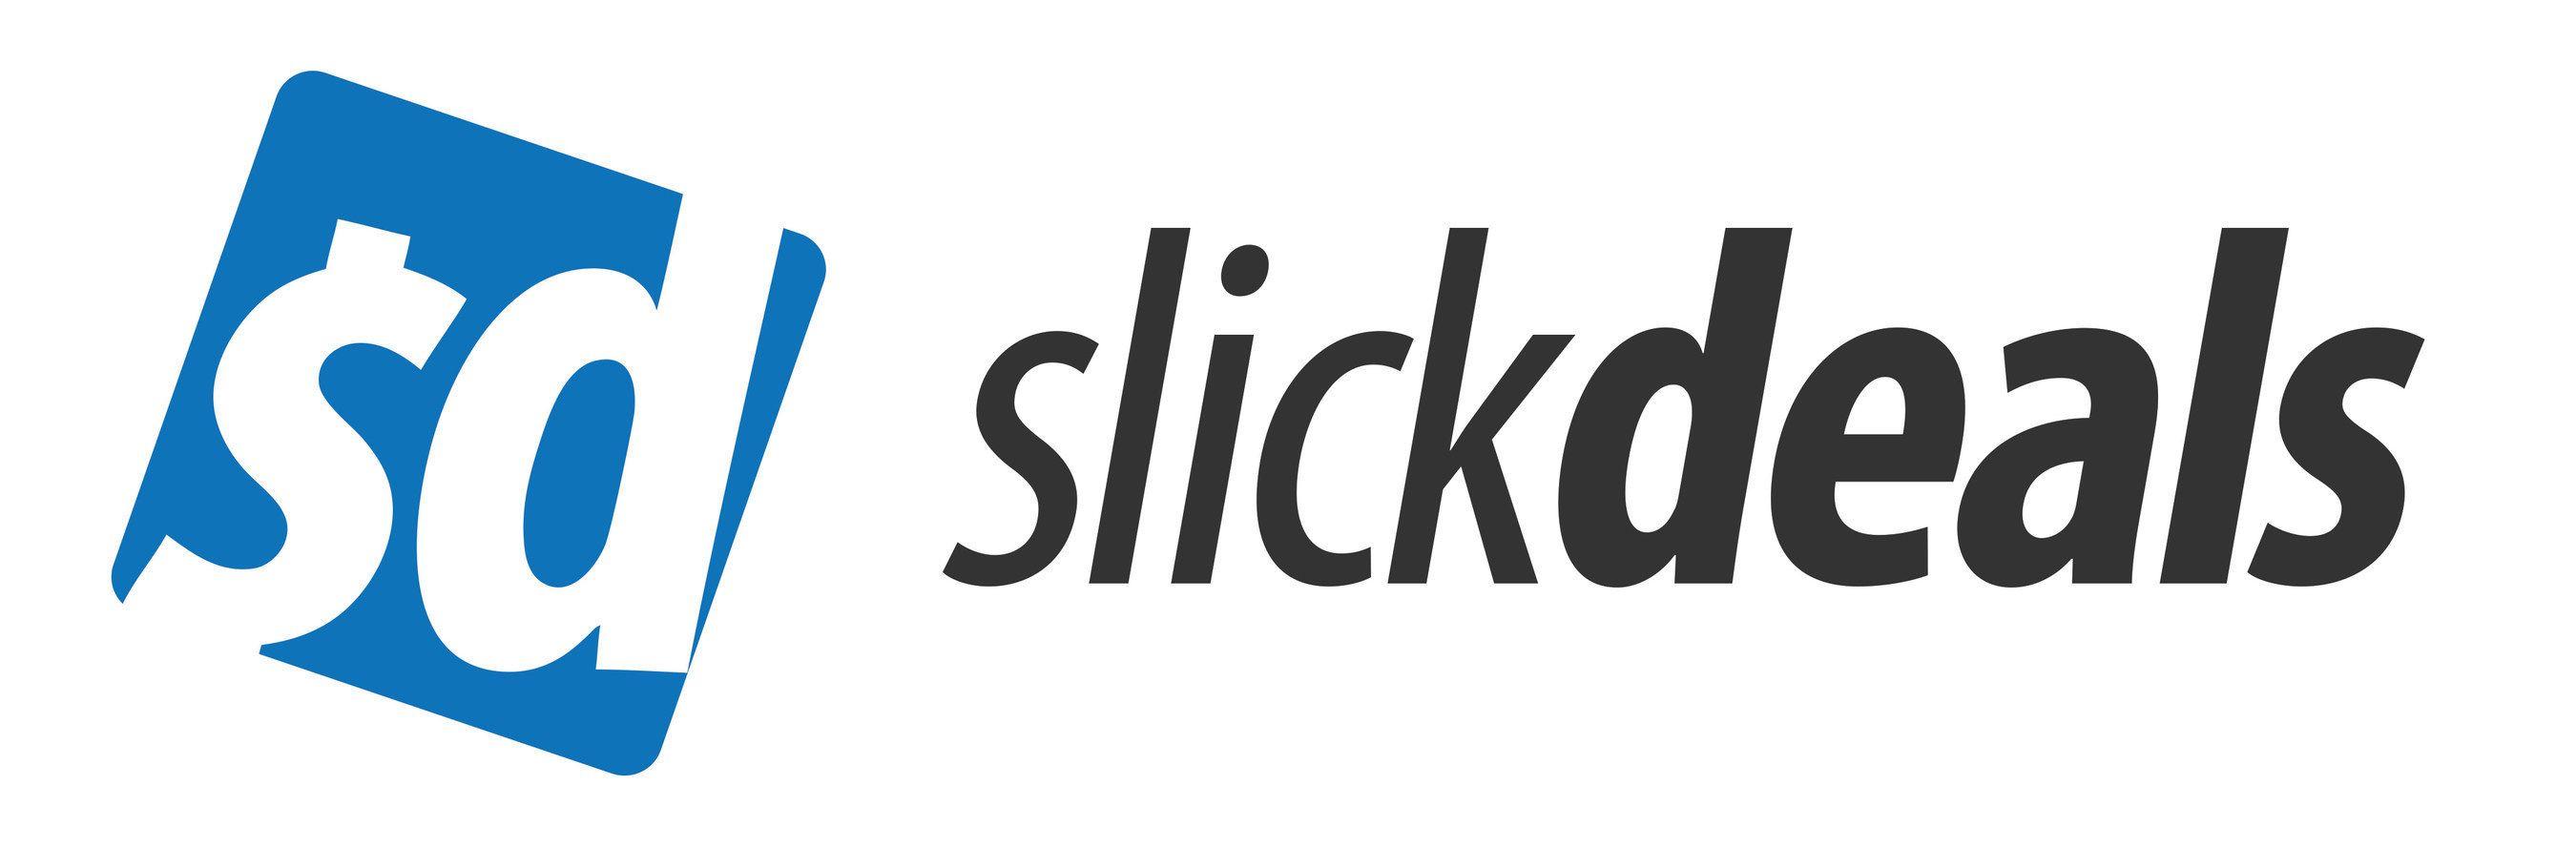 Slickdeals.net Logo - Slickdeals Named Deloitte Technology Fast 500™